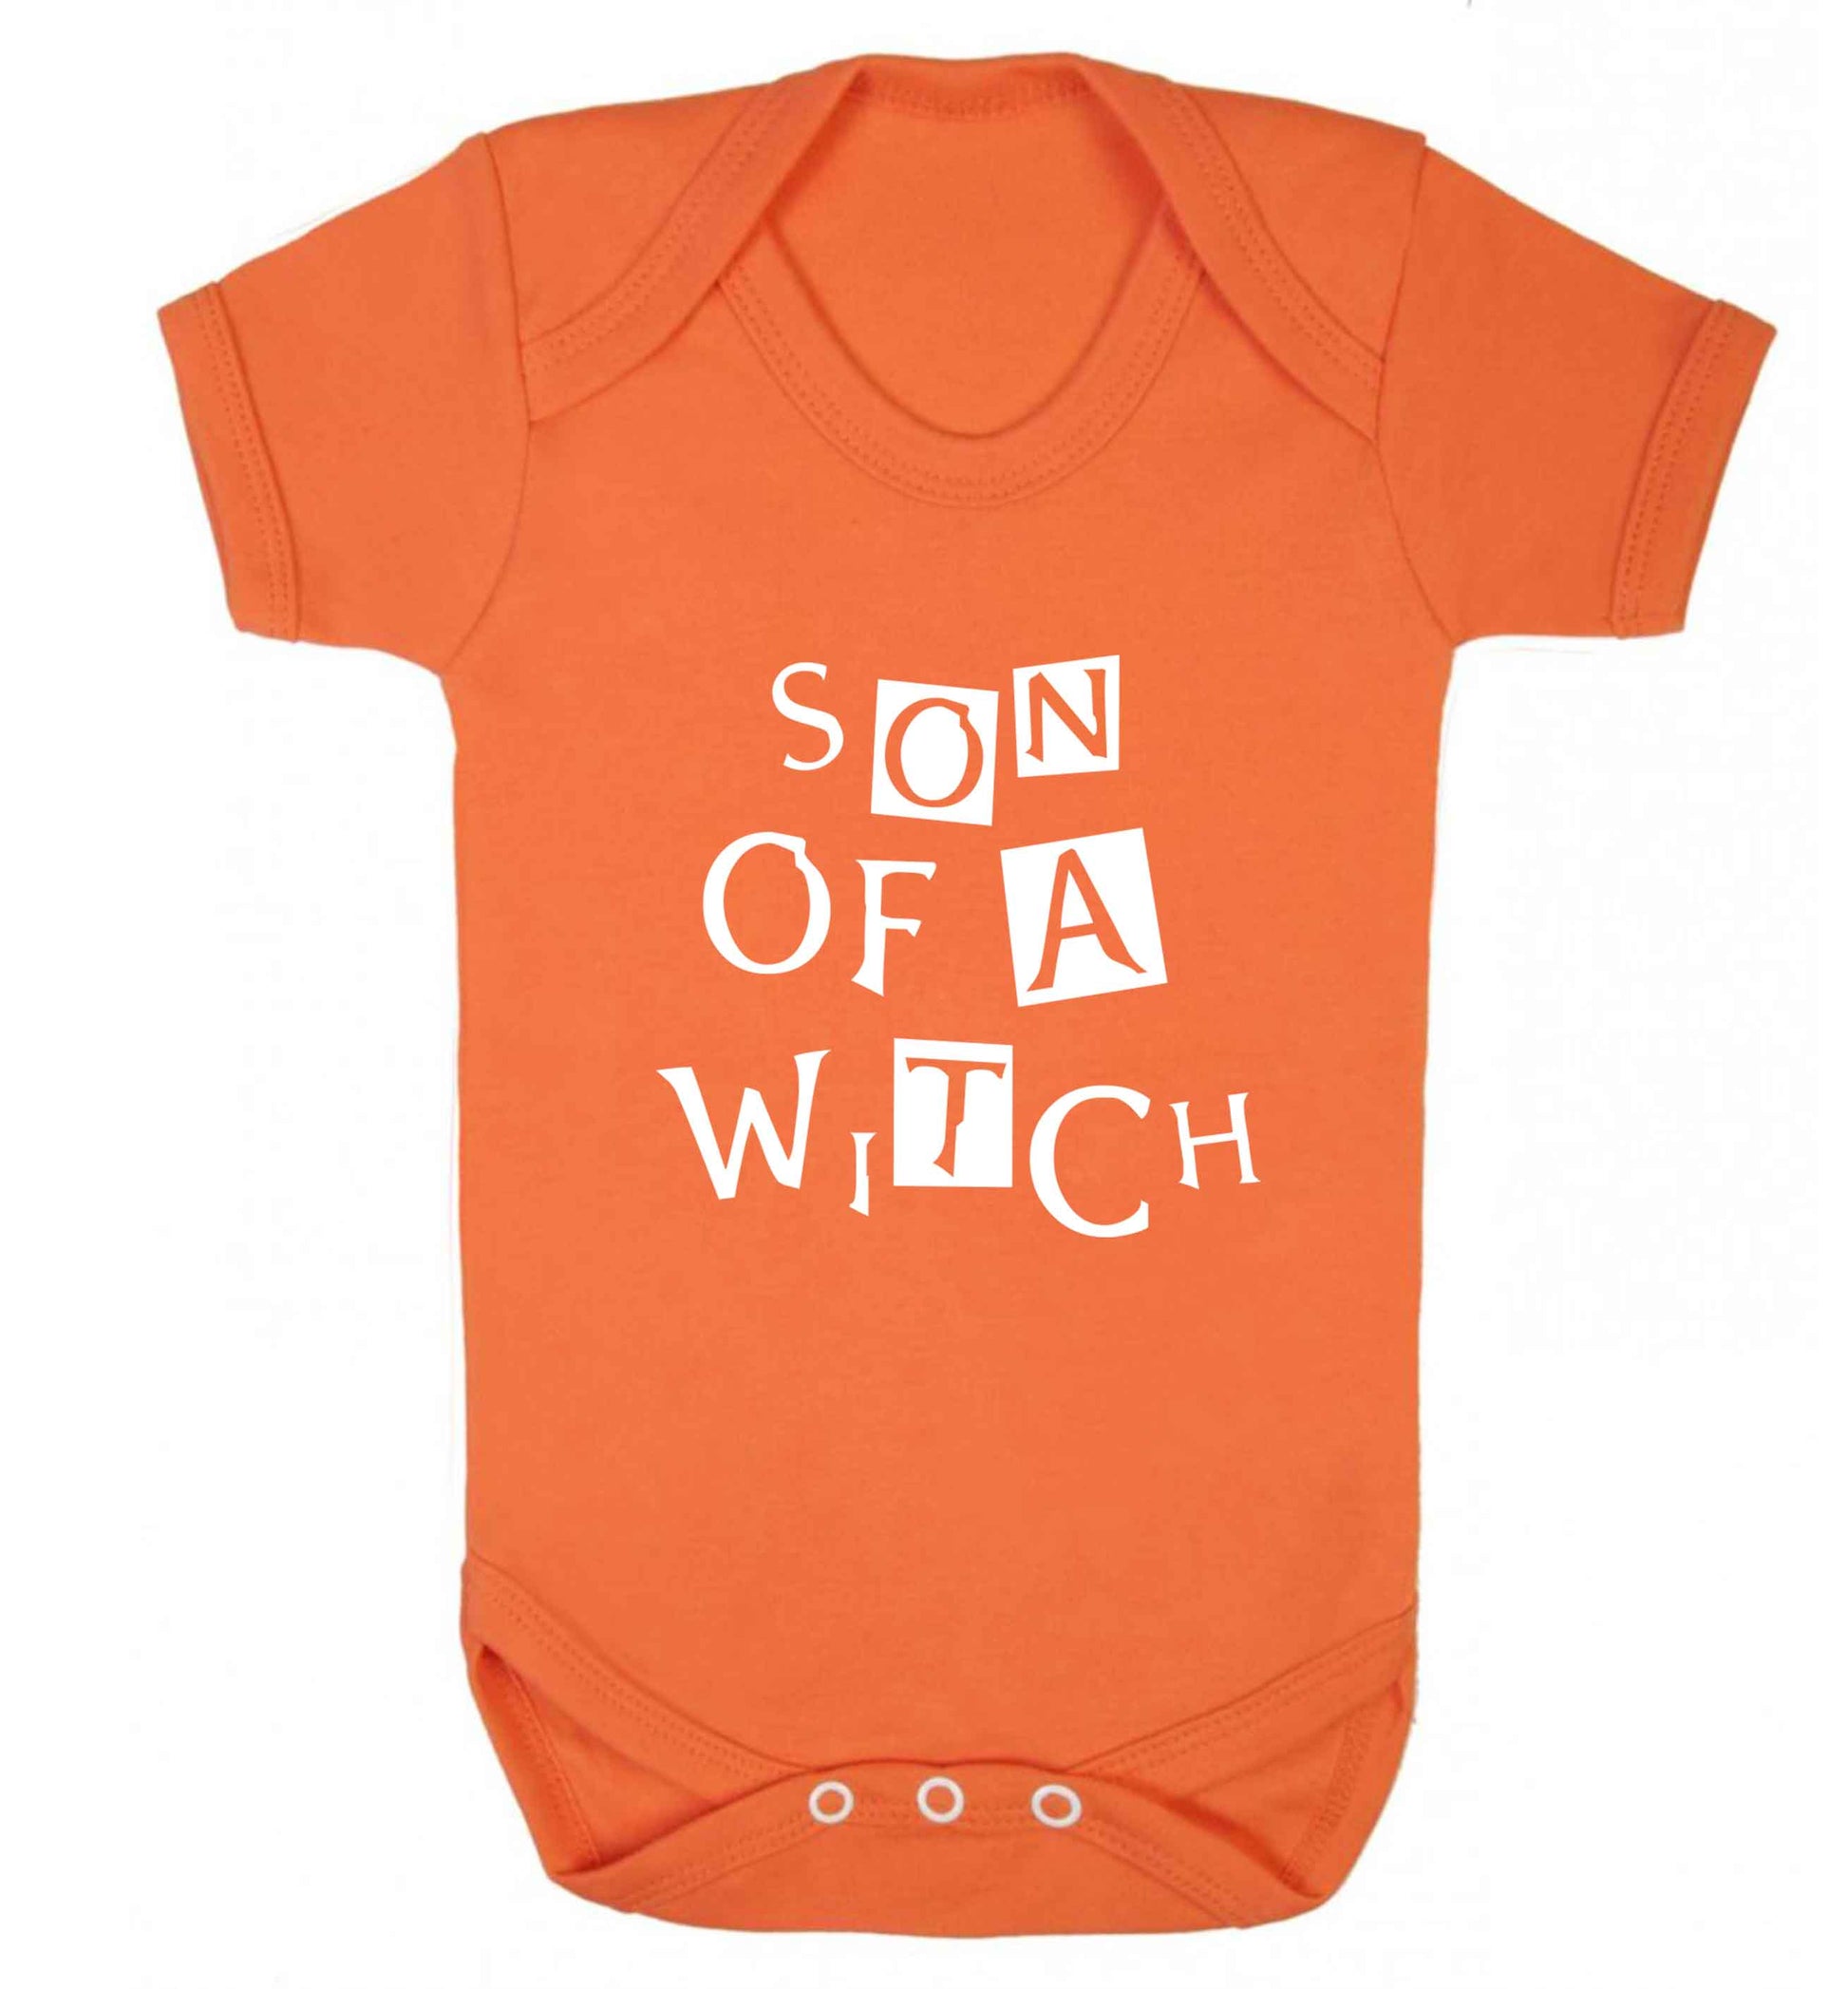 Son of a witch baby vest orange 18-24 months